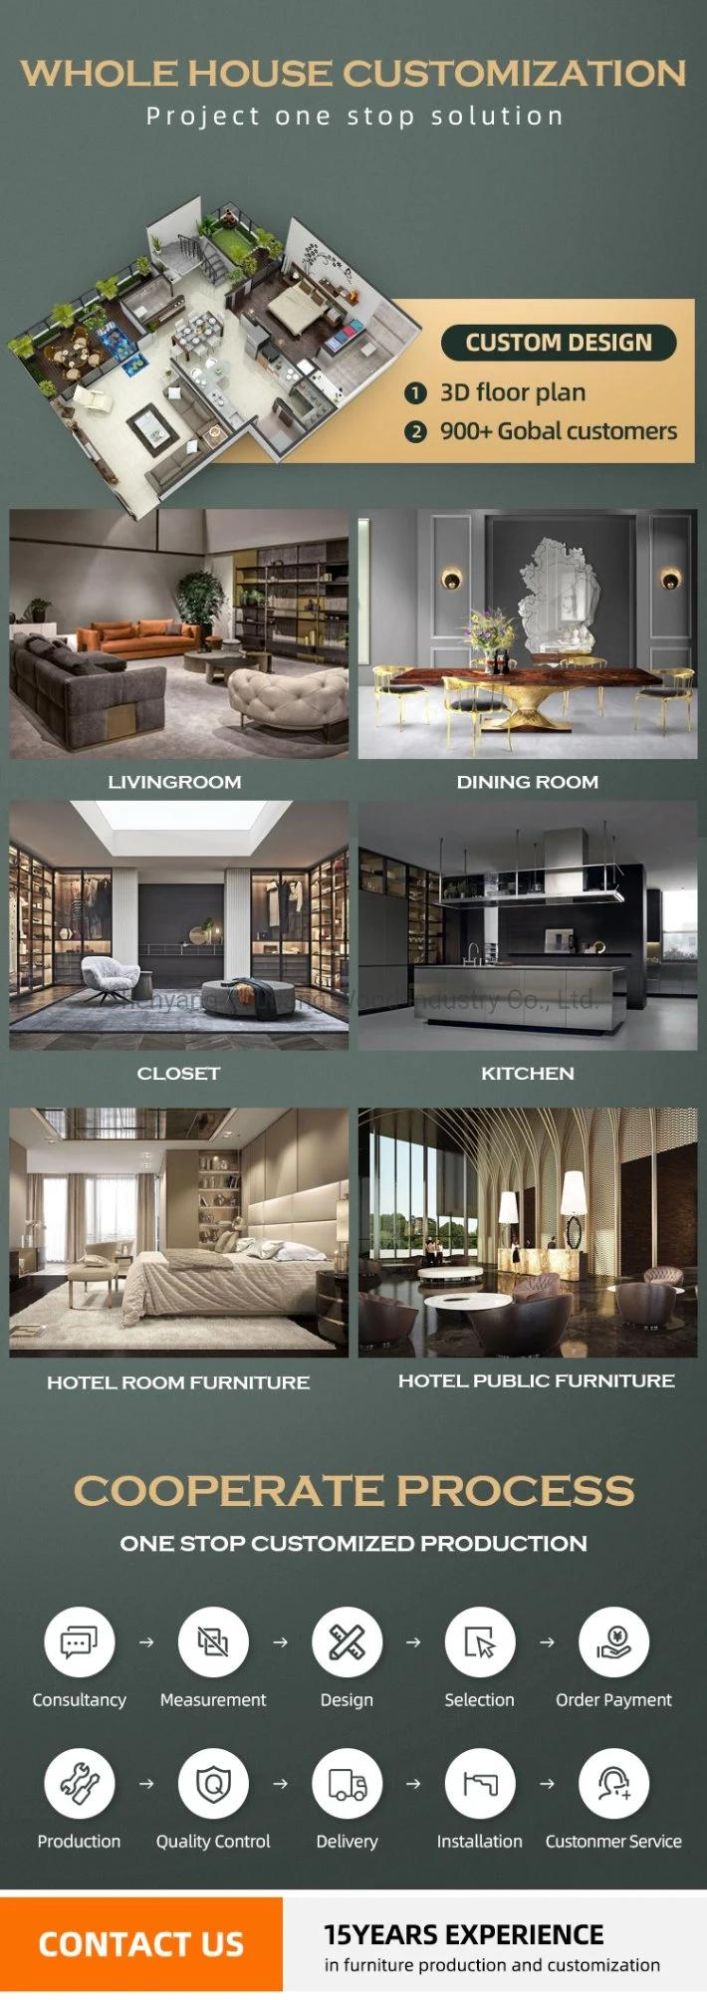 2021 Home Living Wooden Modern Light Luxury Bedroom Set Bed